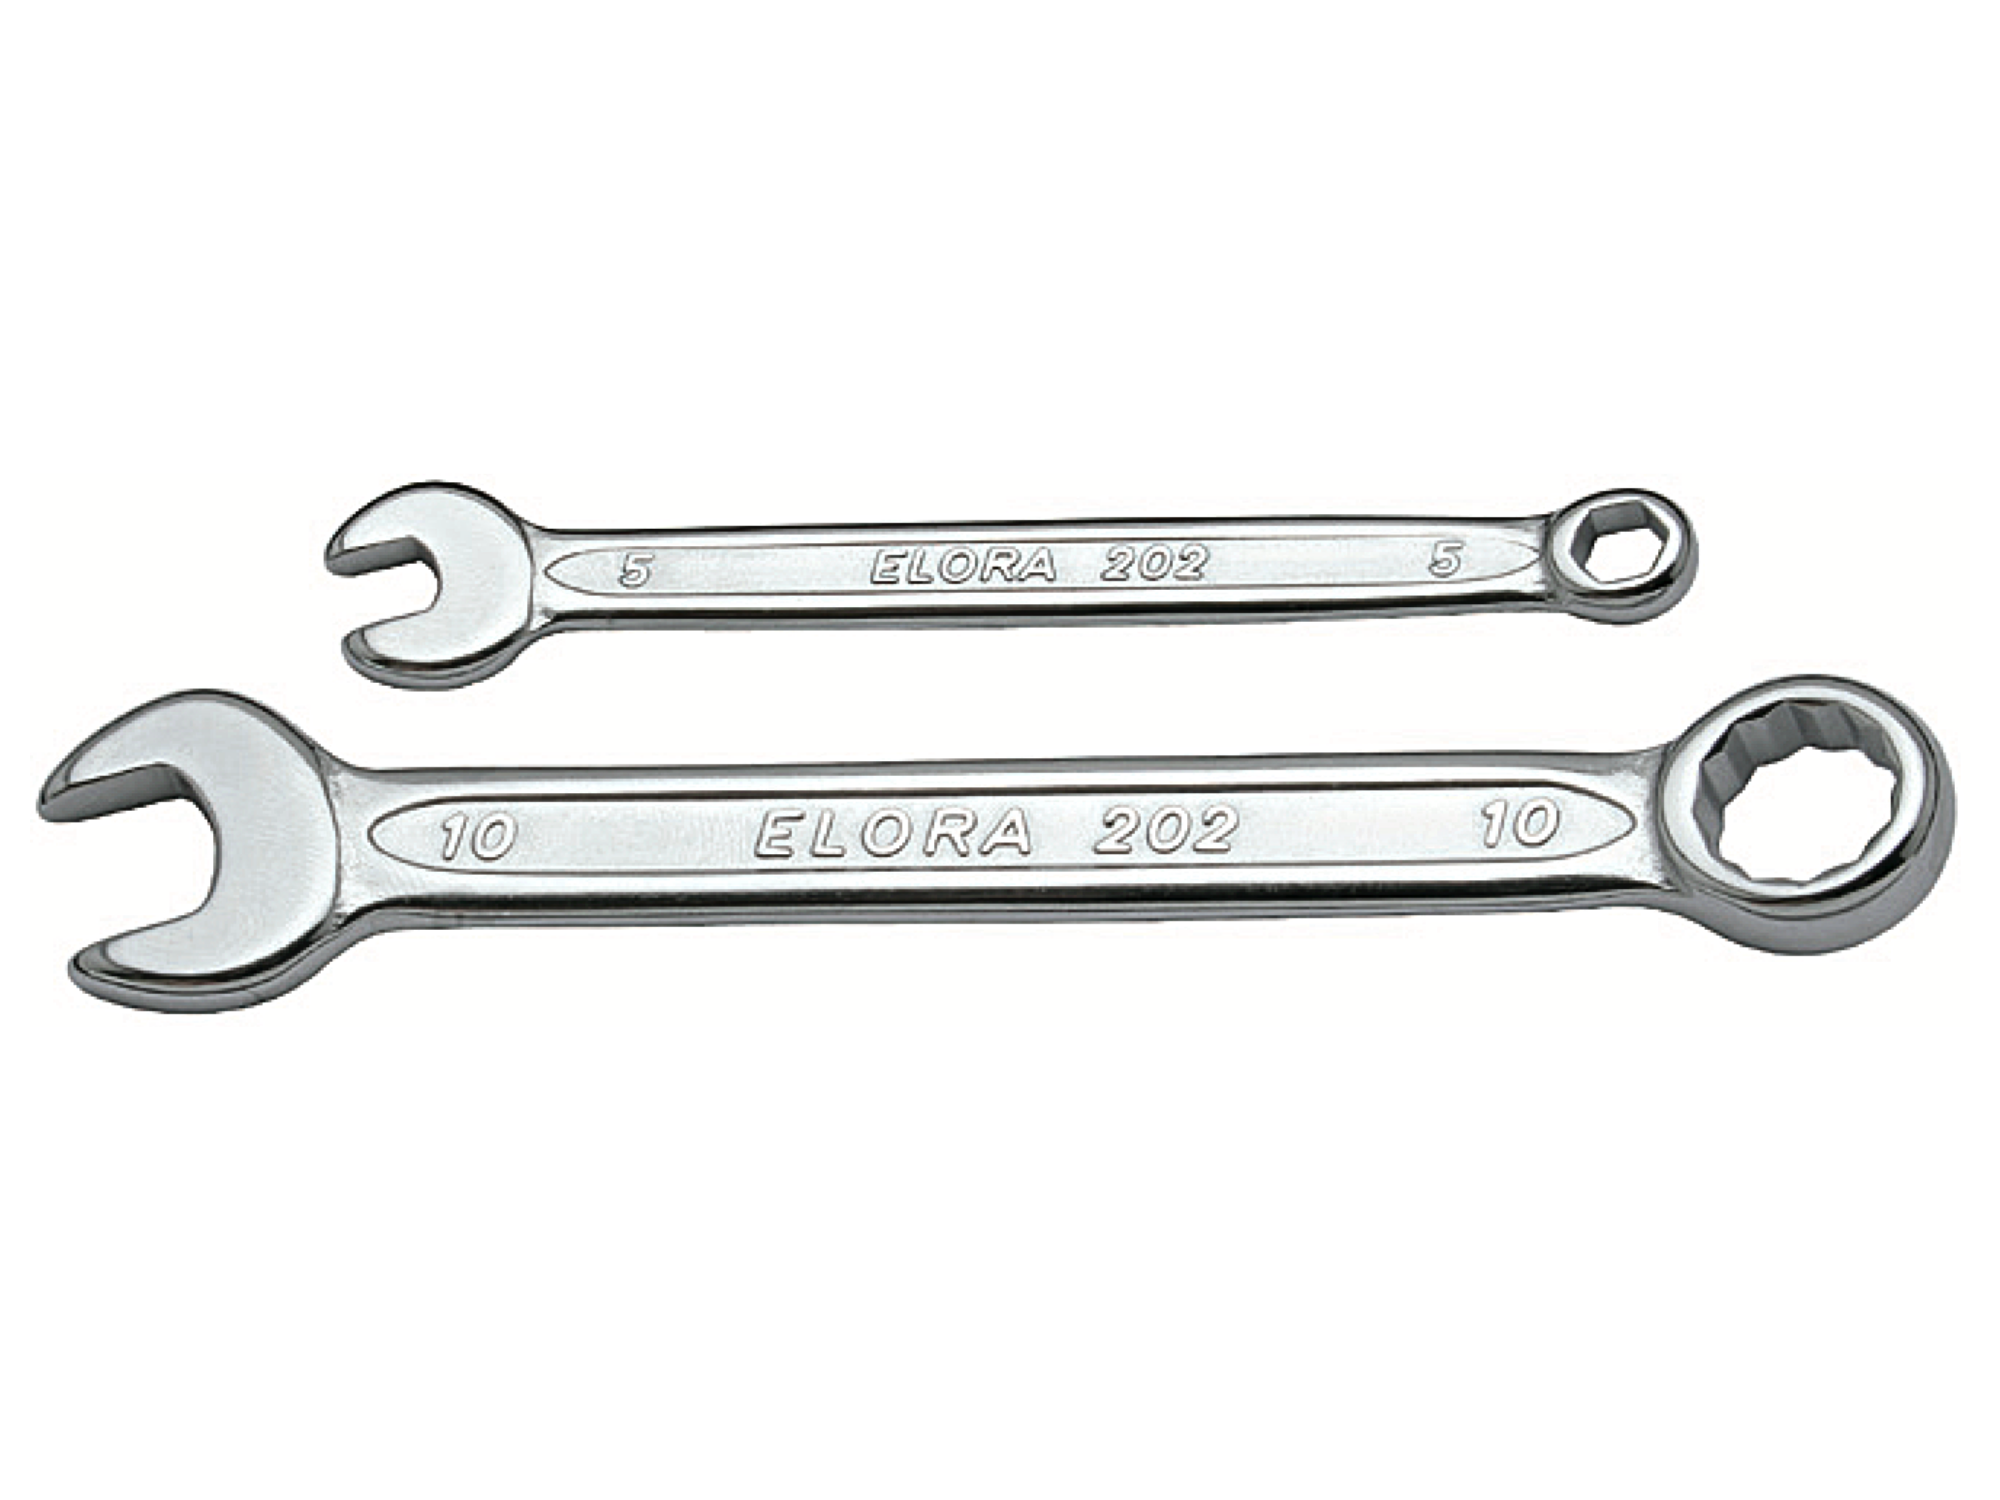 ELORA 202 Combination Spanner, Extra Short (ELORA Tools) - Premium Combination Spanner from ELORA - Shop now at Yew Aik.